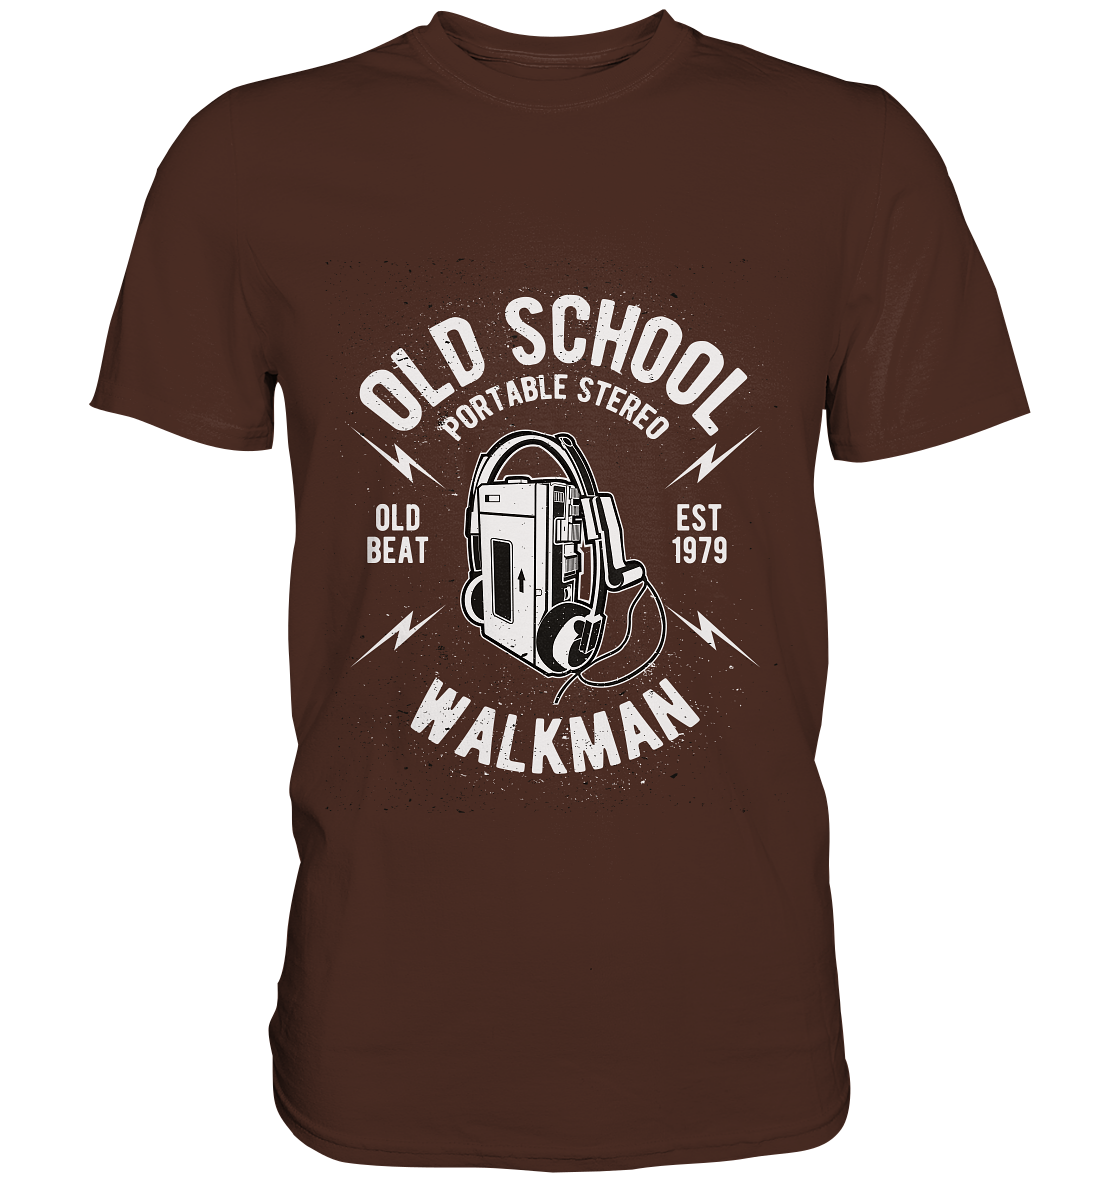 Old School. Vintage Walkman - Unisex Premium Shirt